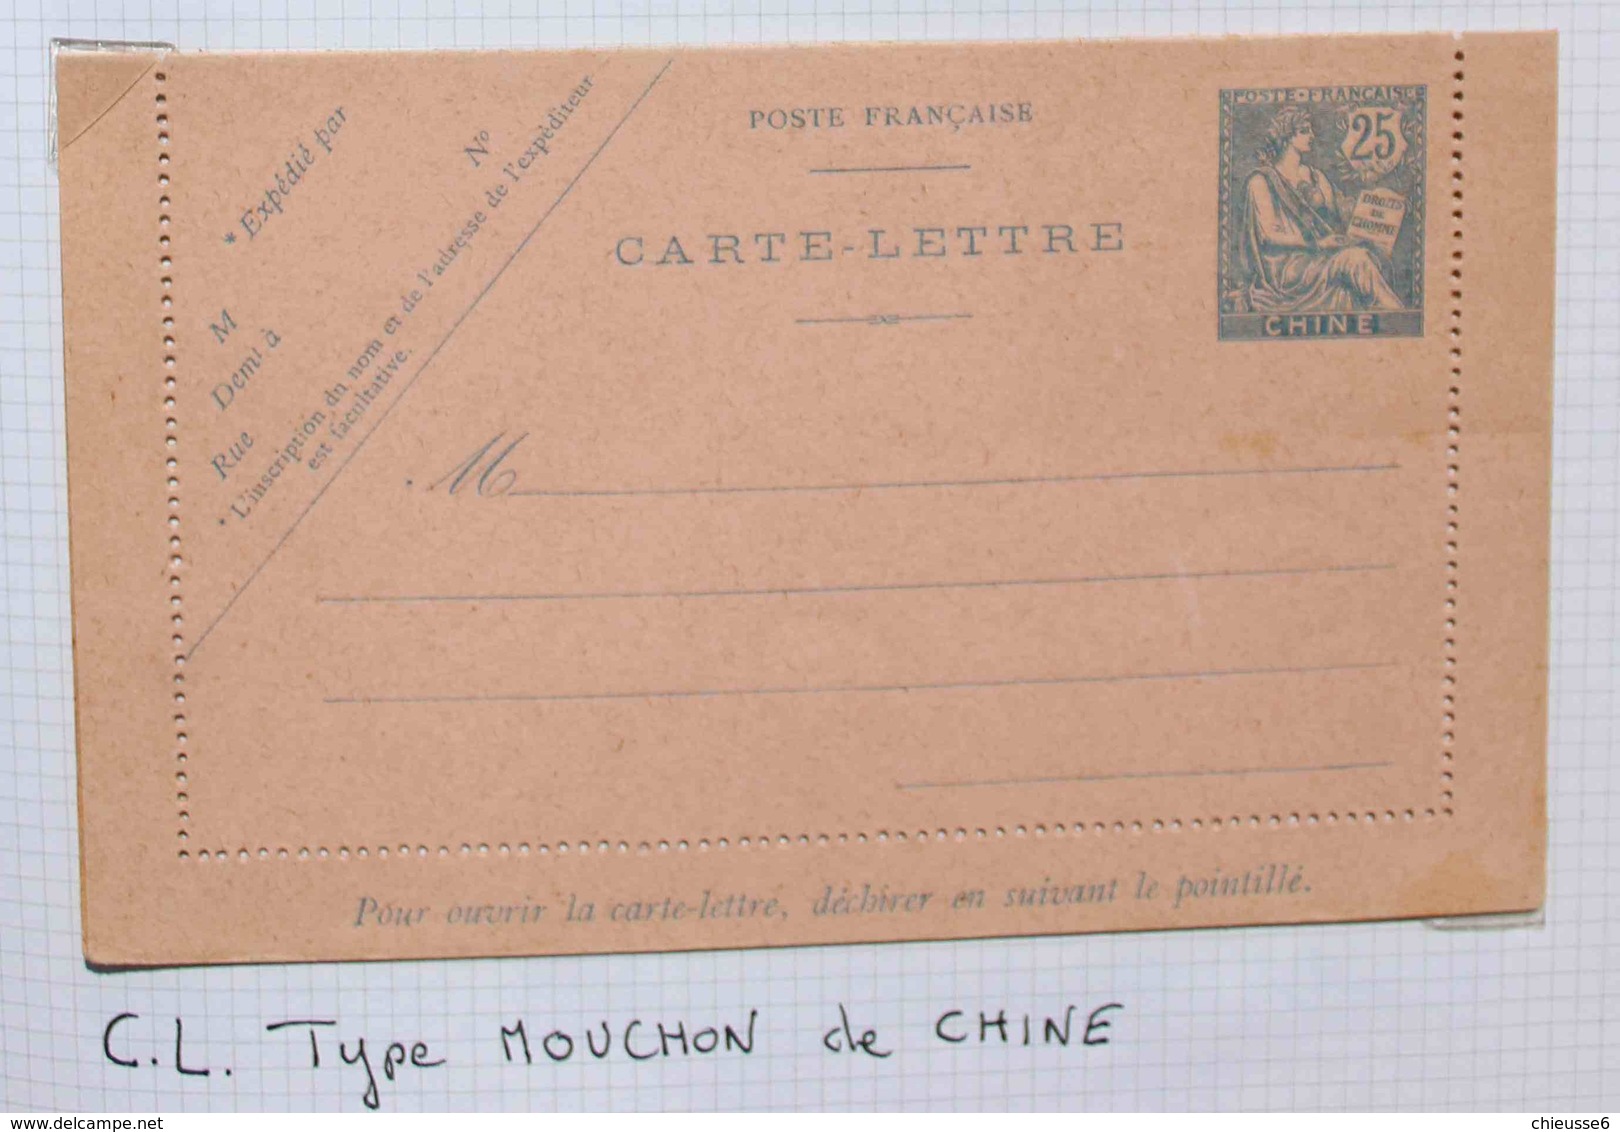 Chine - C.L.  Type Mouchon  CHINE - - Lettres & Documents